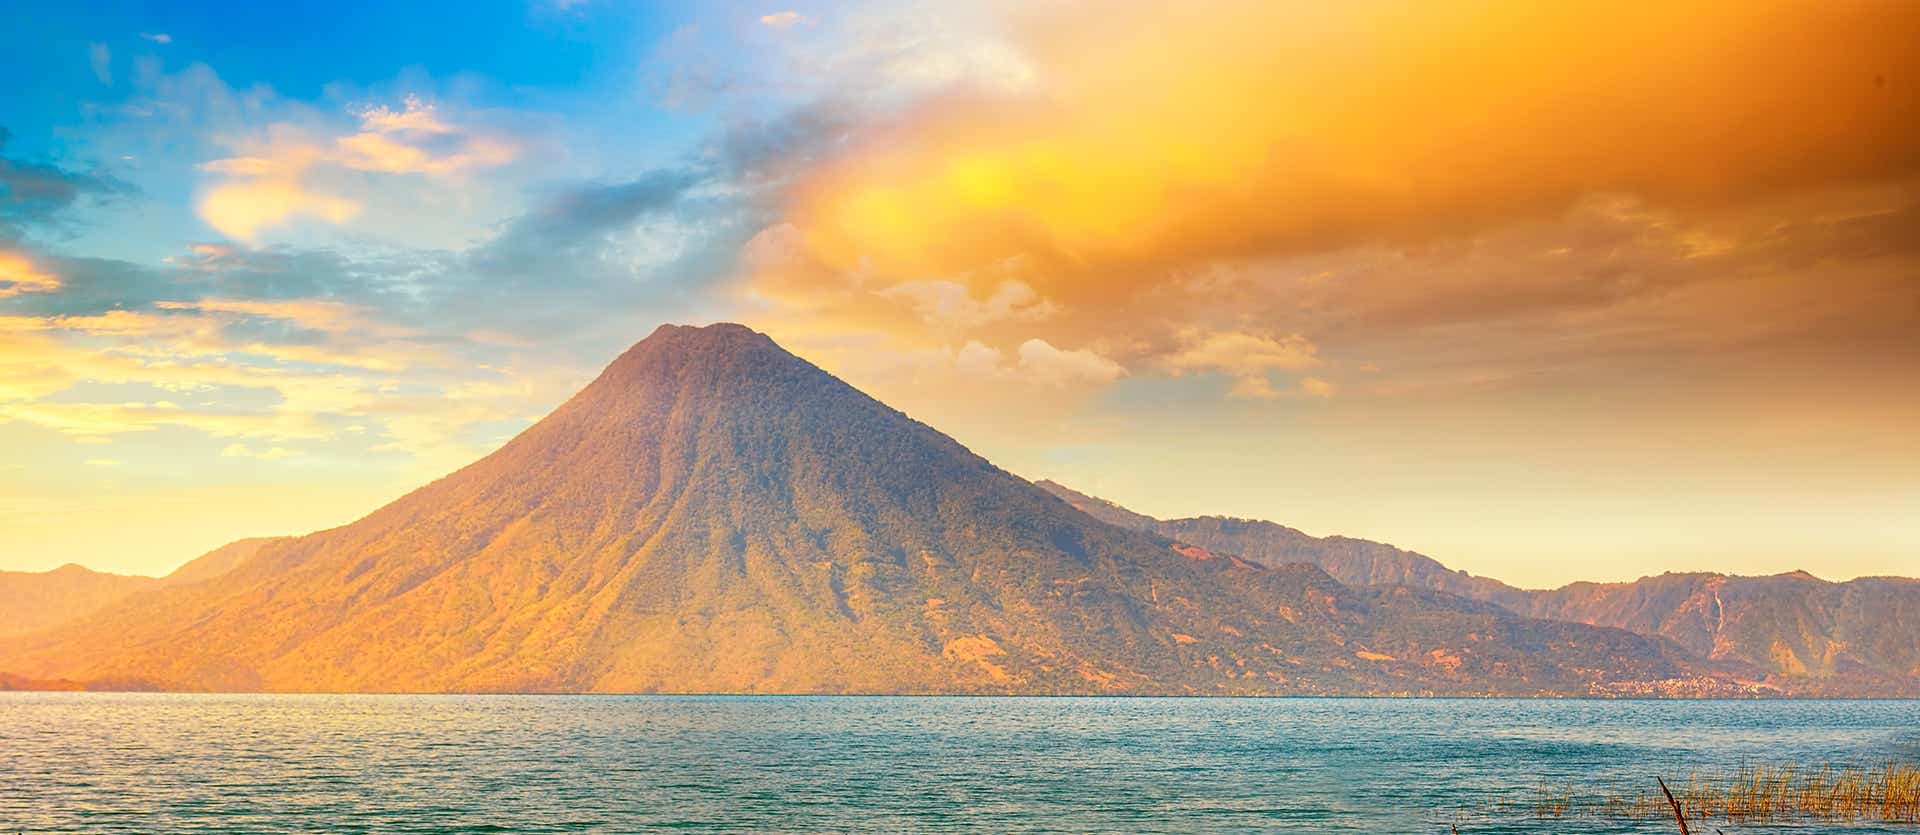 Toliman Volcano <span class="iconos separador"></span> Lake Atitlan 